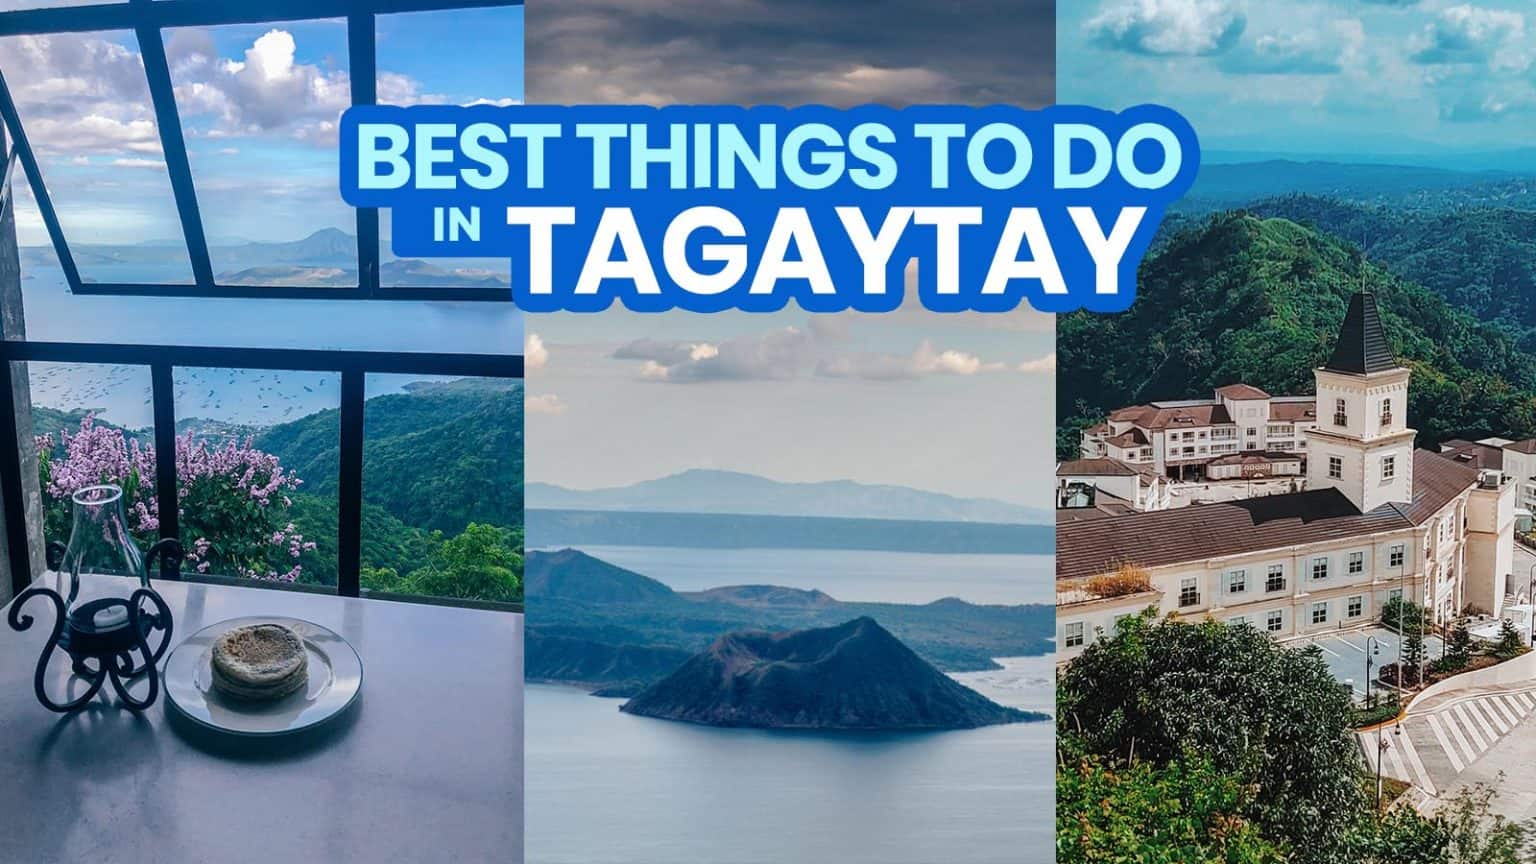 tagaytay tourist spot open